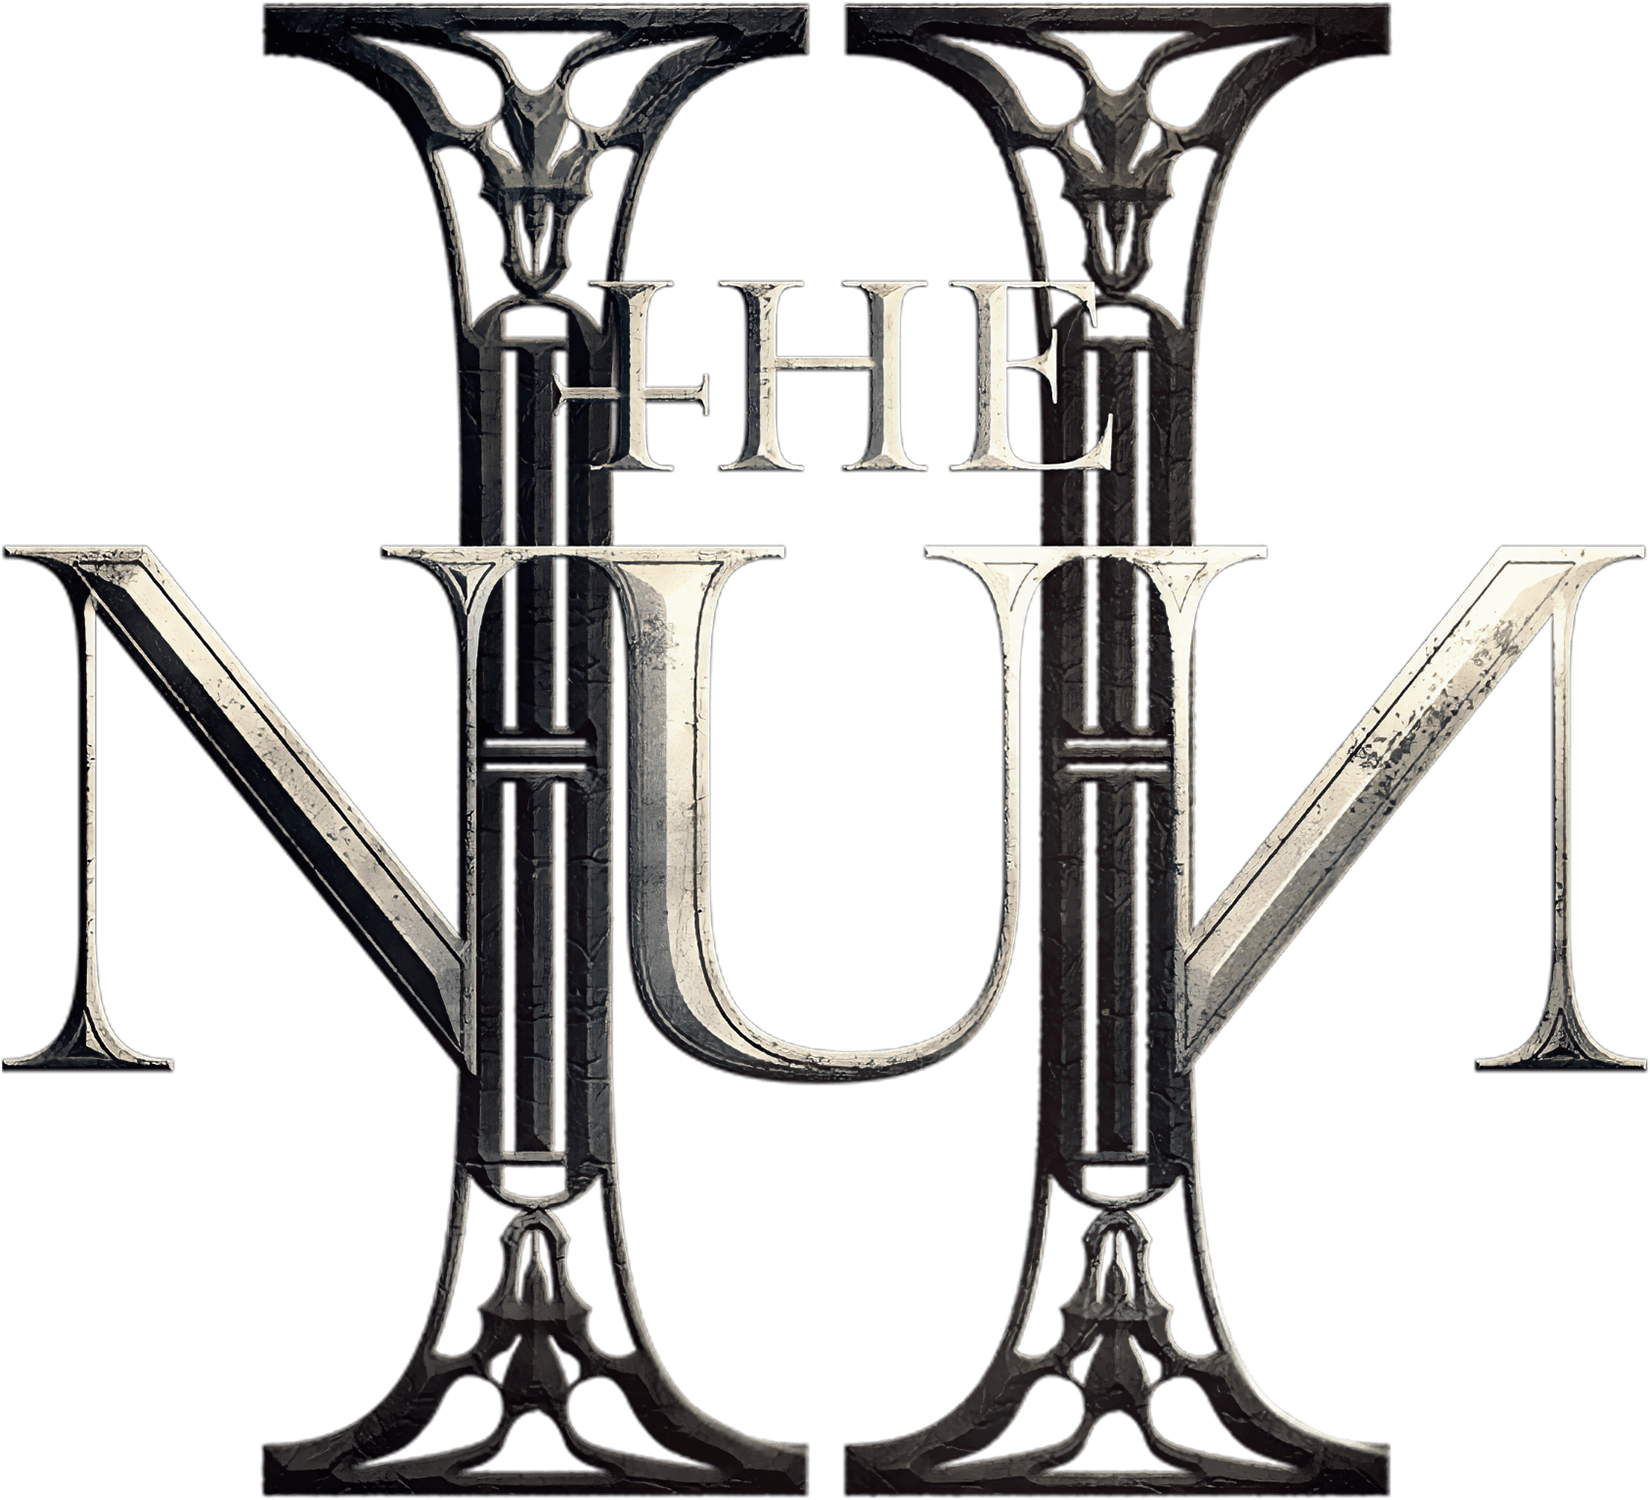 The Nun II logo